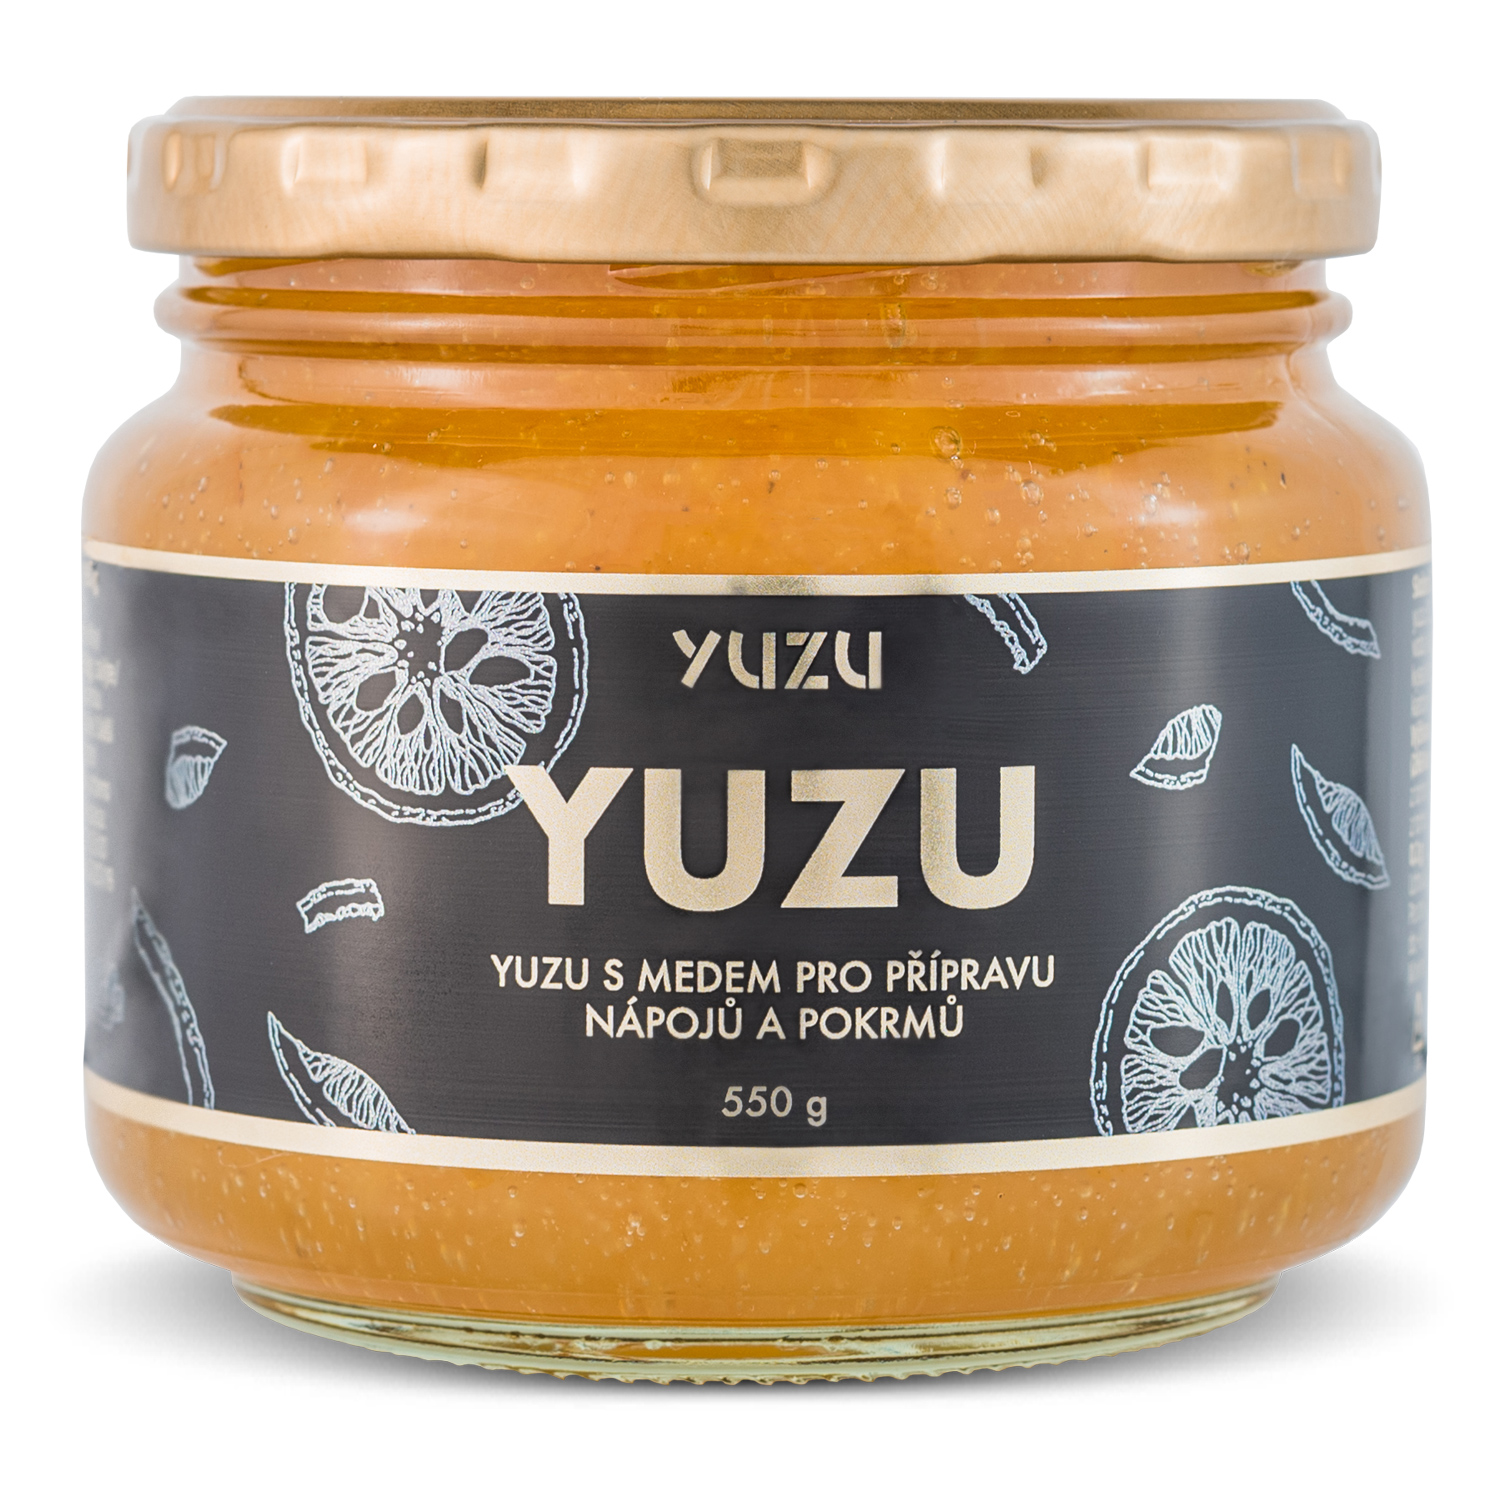 Zobrazit detail výrobku Yuzu Yuzu nápojový koncentrát s kousky yuzu, s vitaminem C 550 g